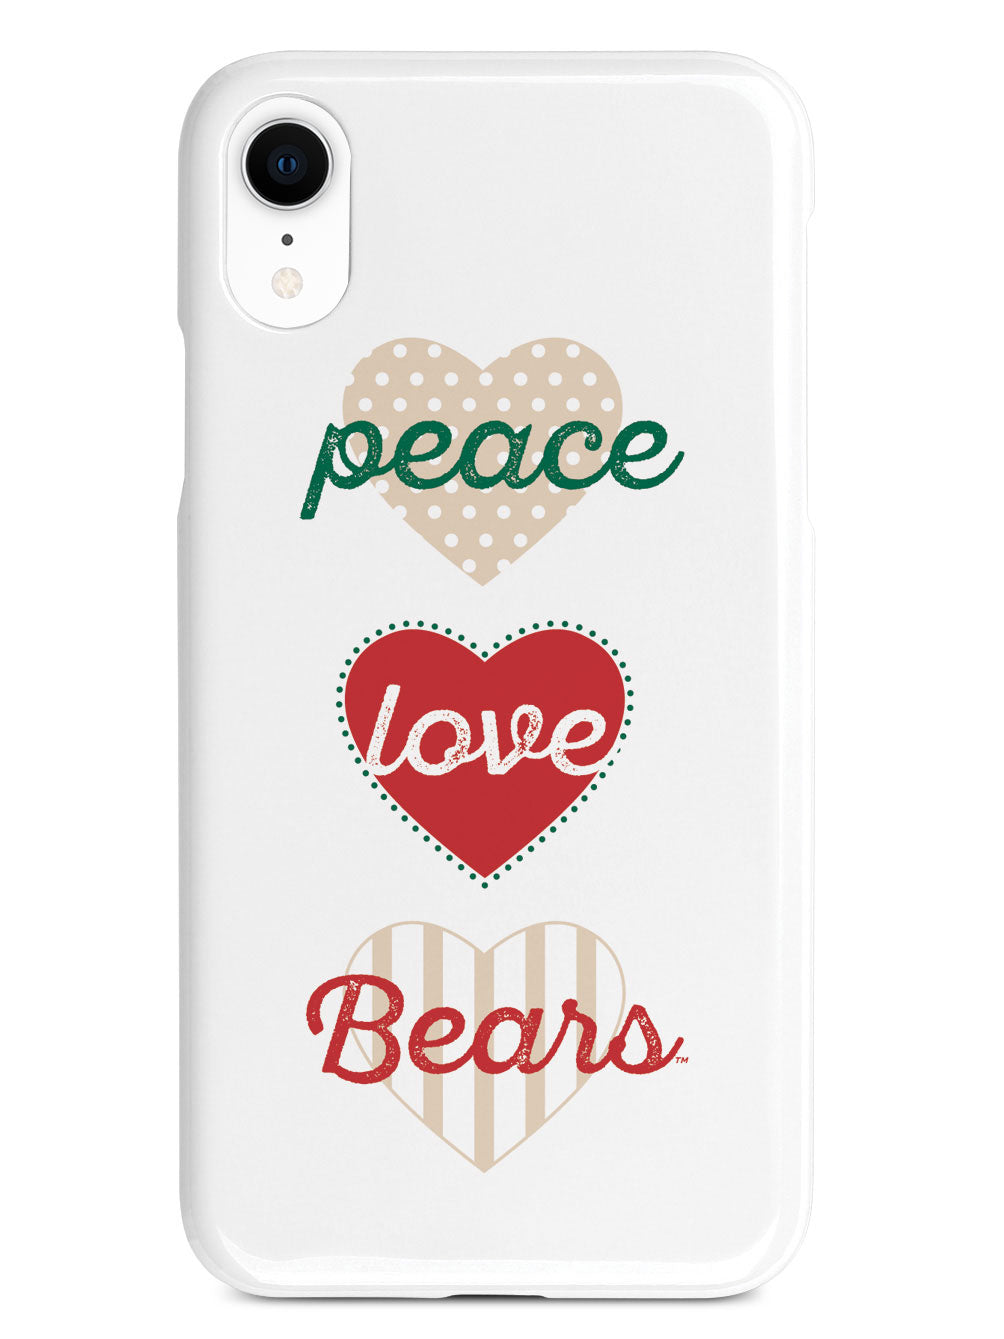 Peace, Love, Bears - Washington University, St Louis Case